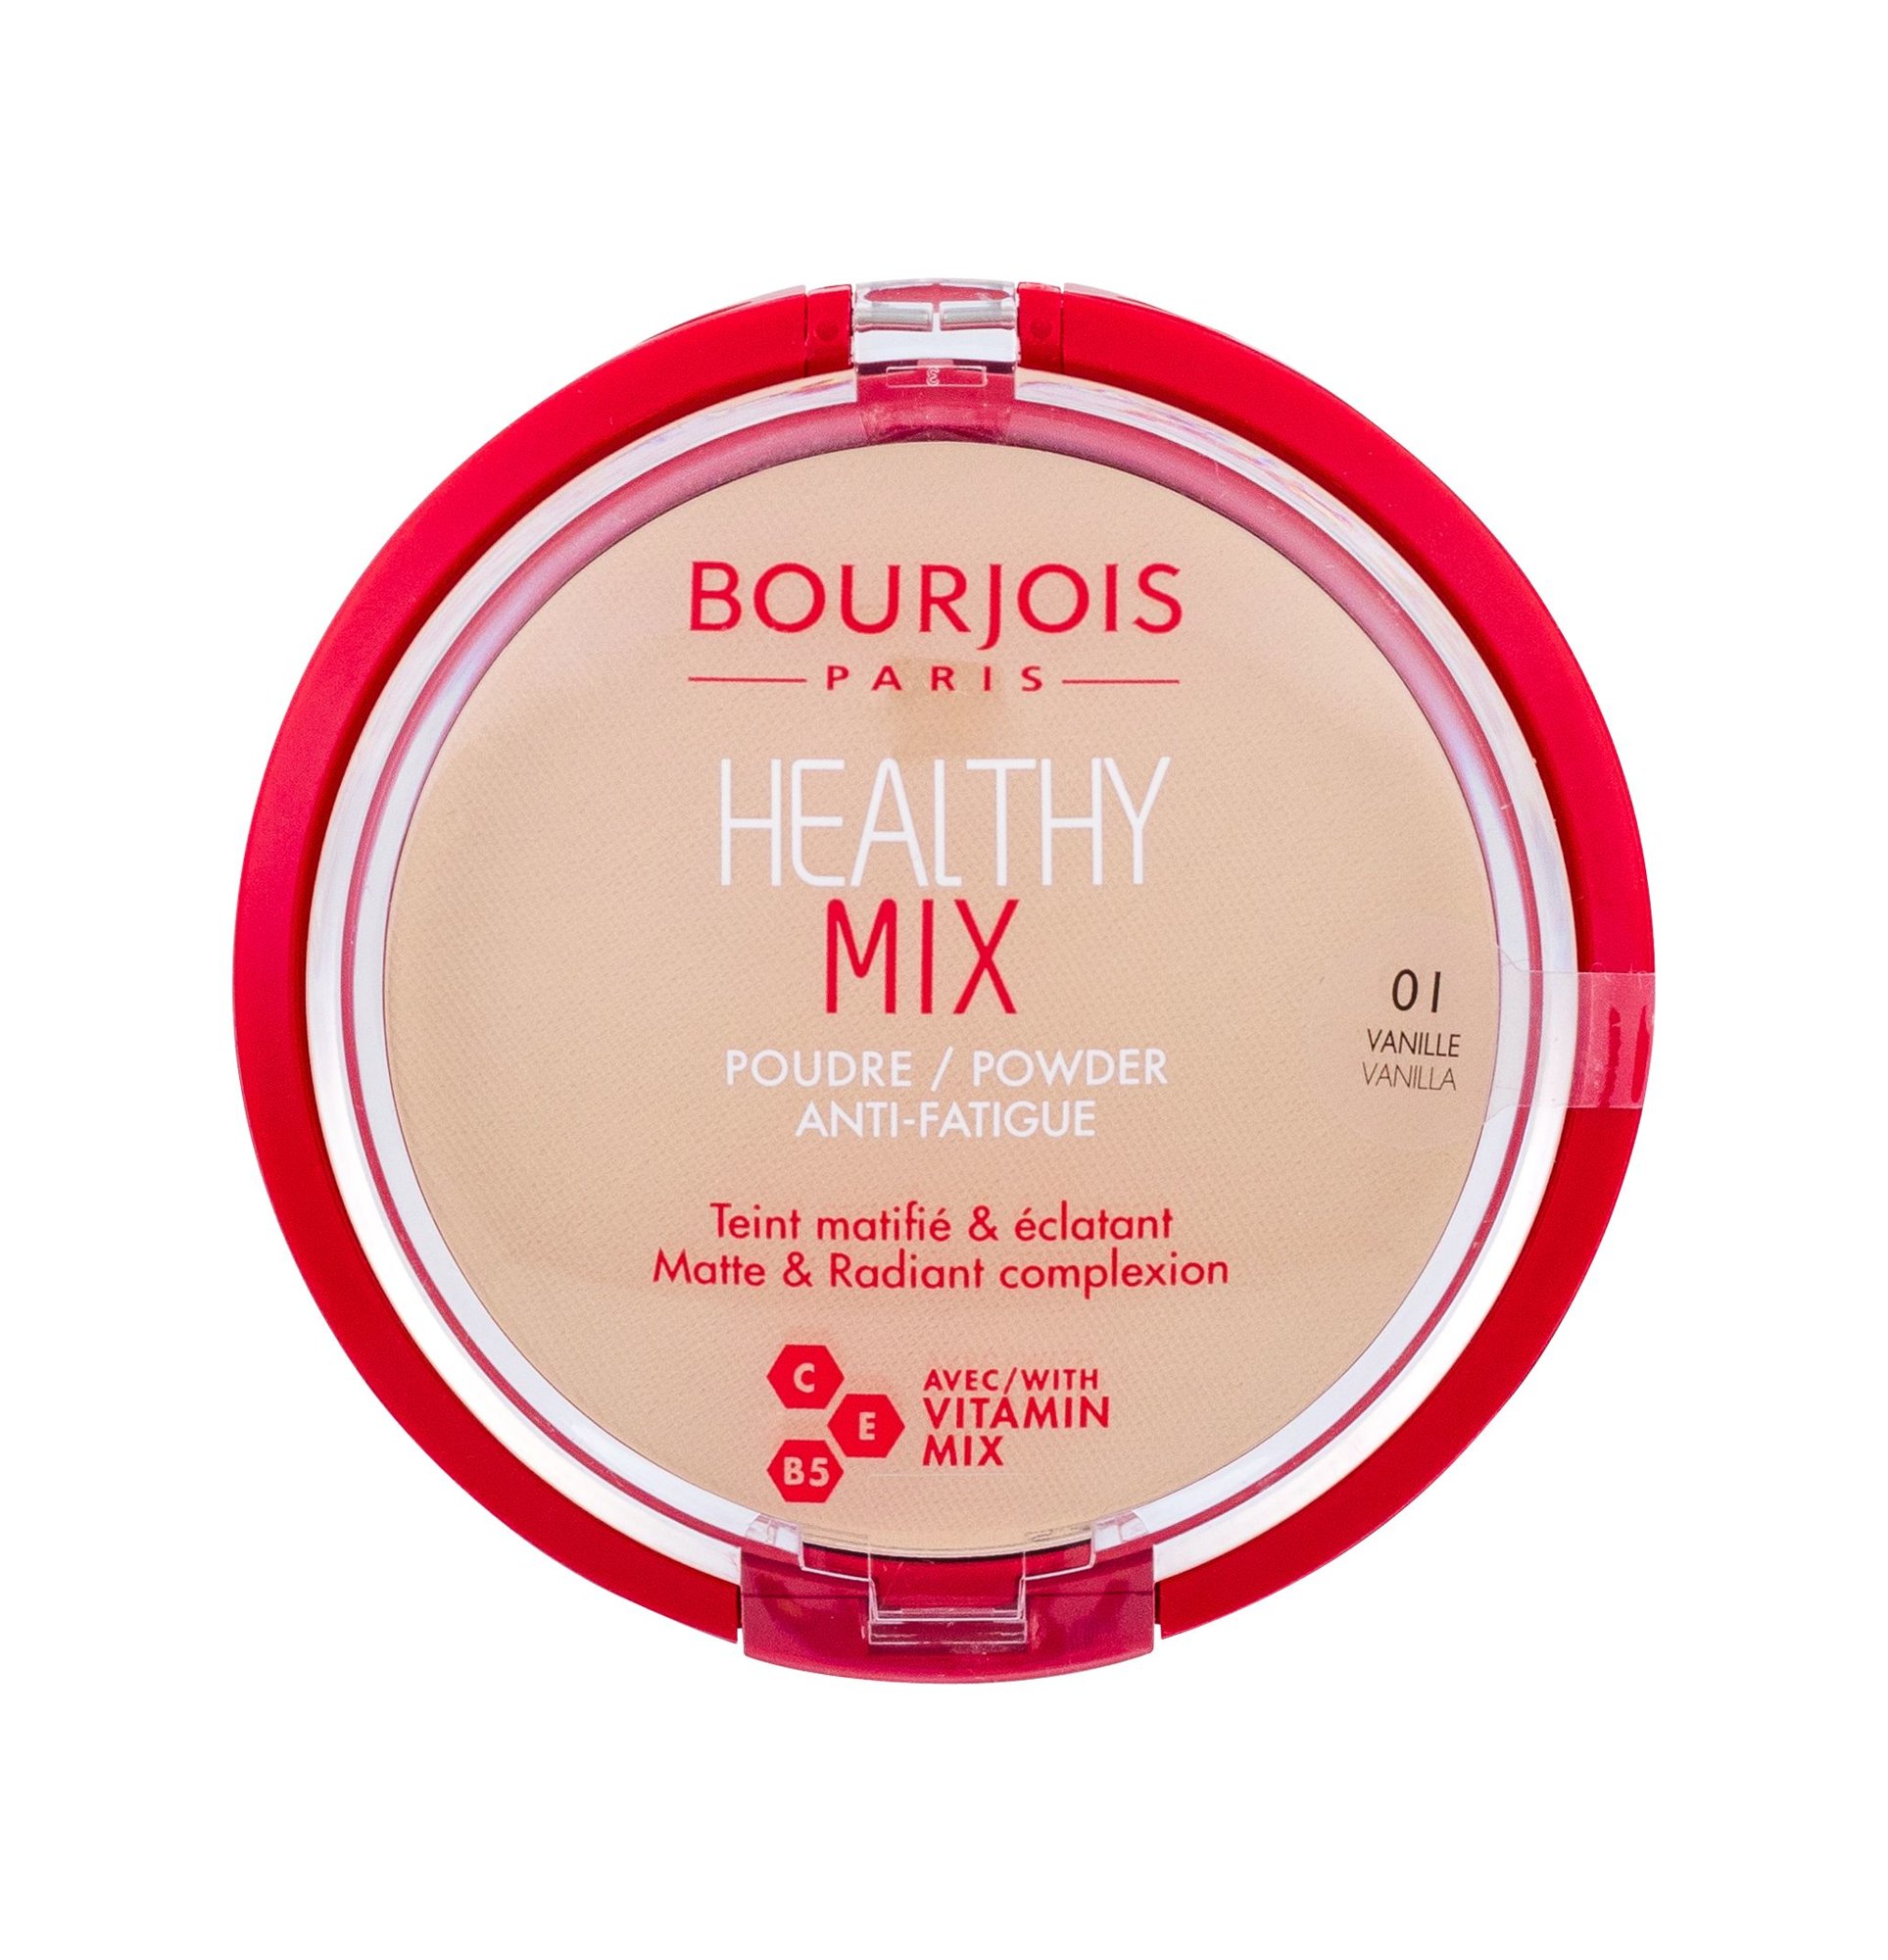 BOURJOIS Paris Healthy Mix Anti-Fatigue sausa pudra